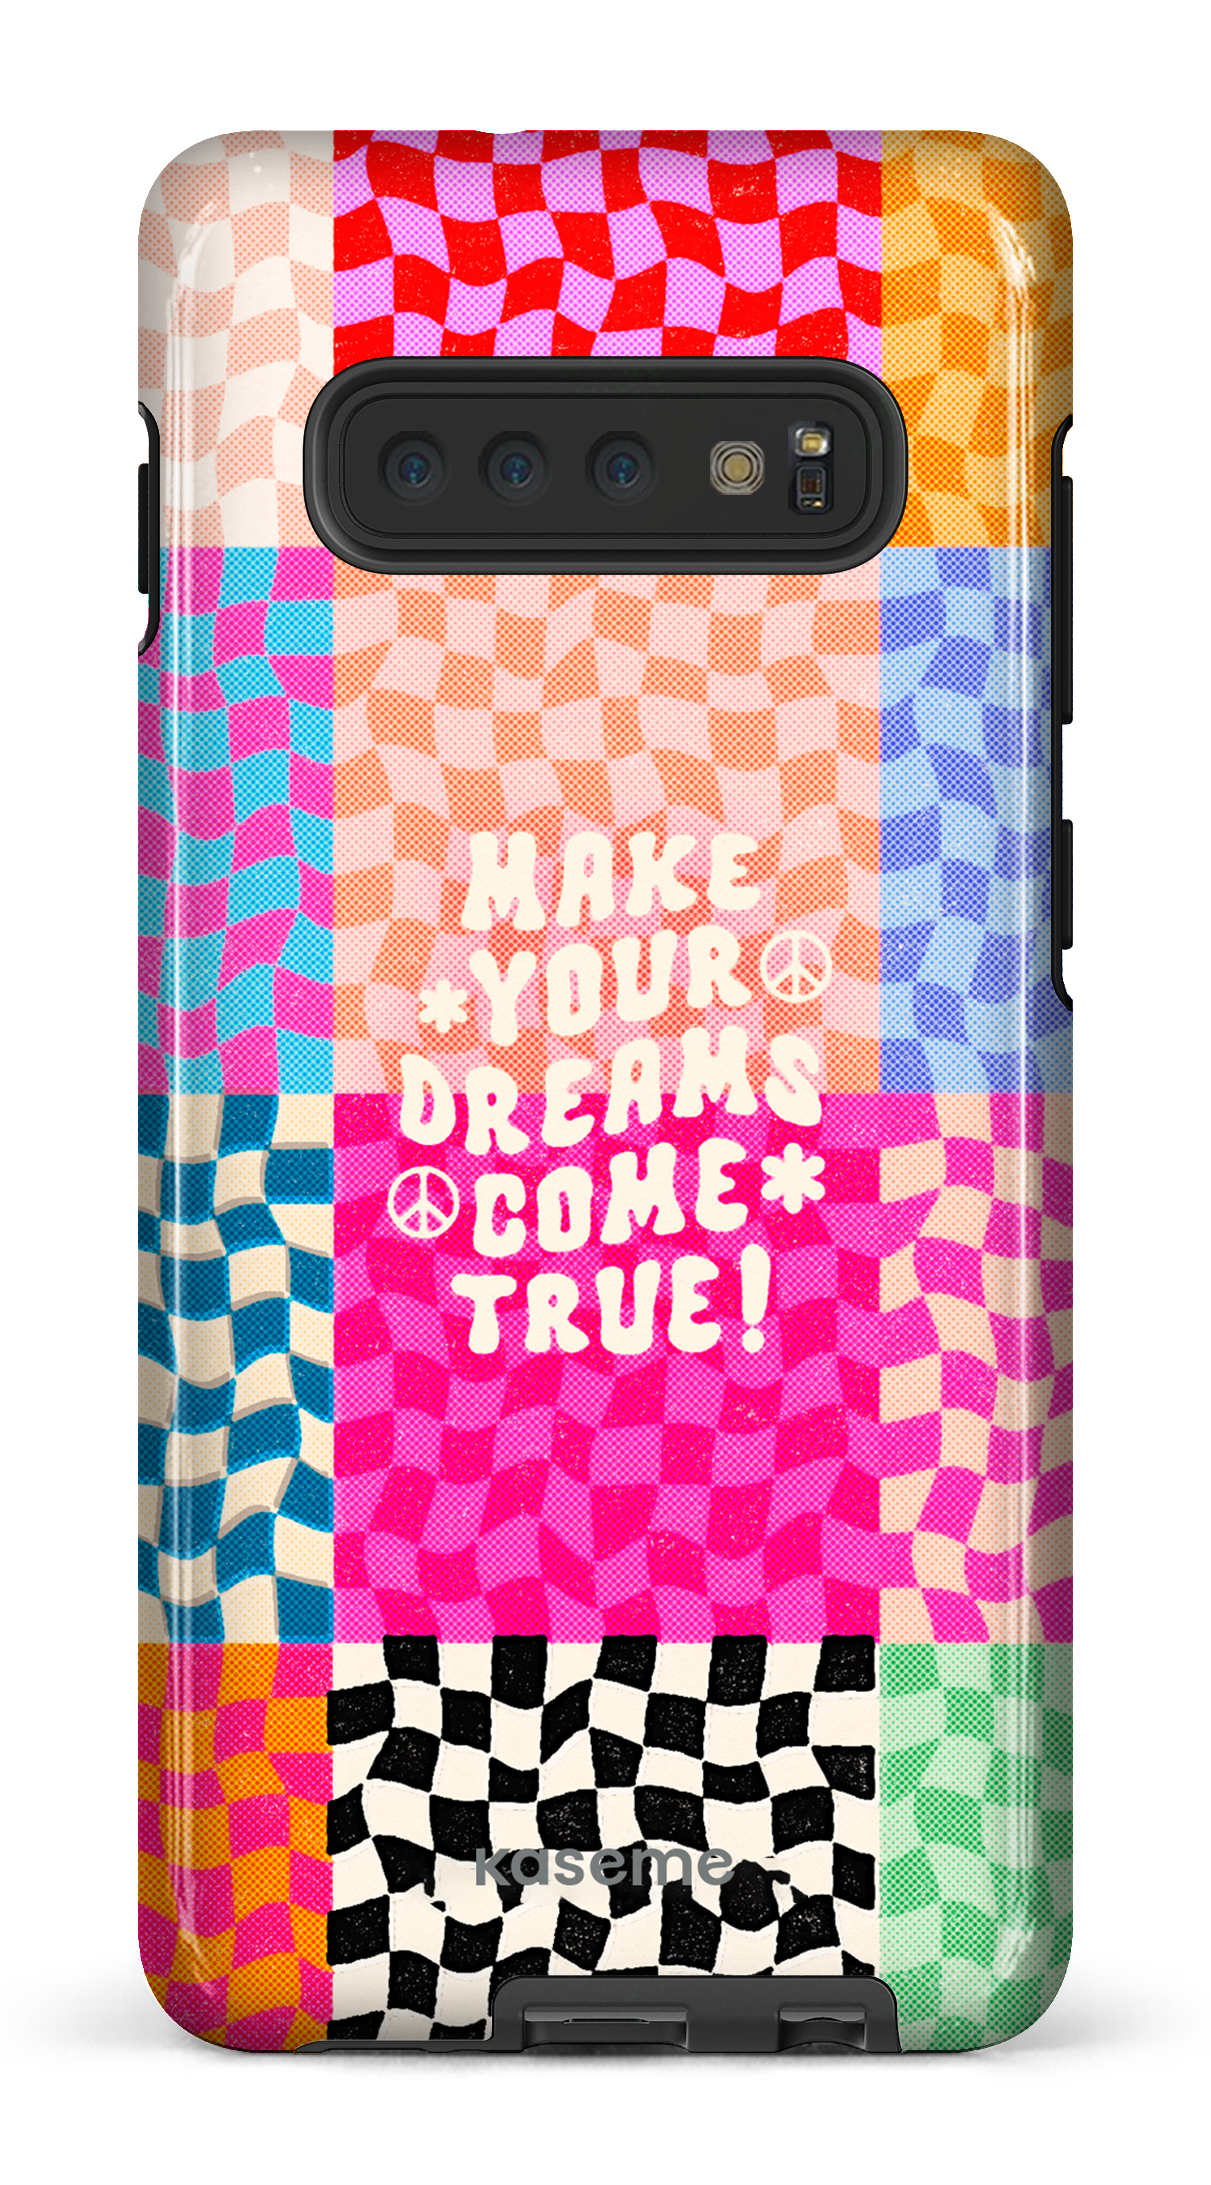 Dreamers - Galaxy S10 Plus